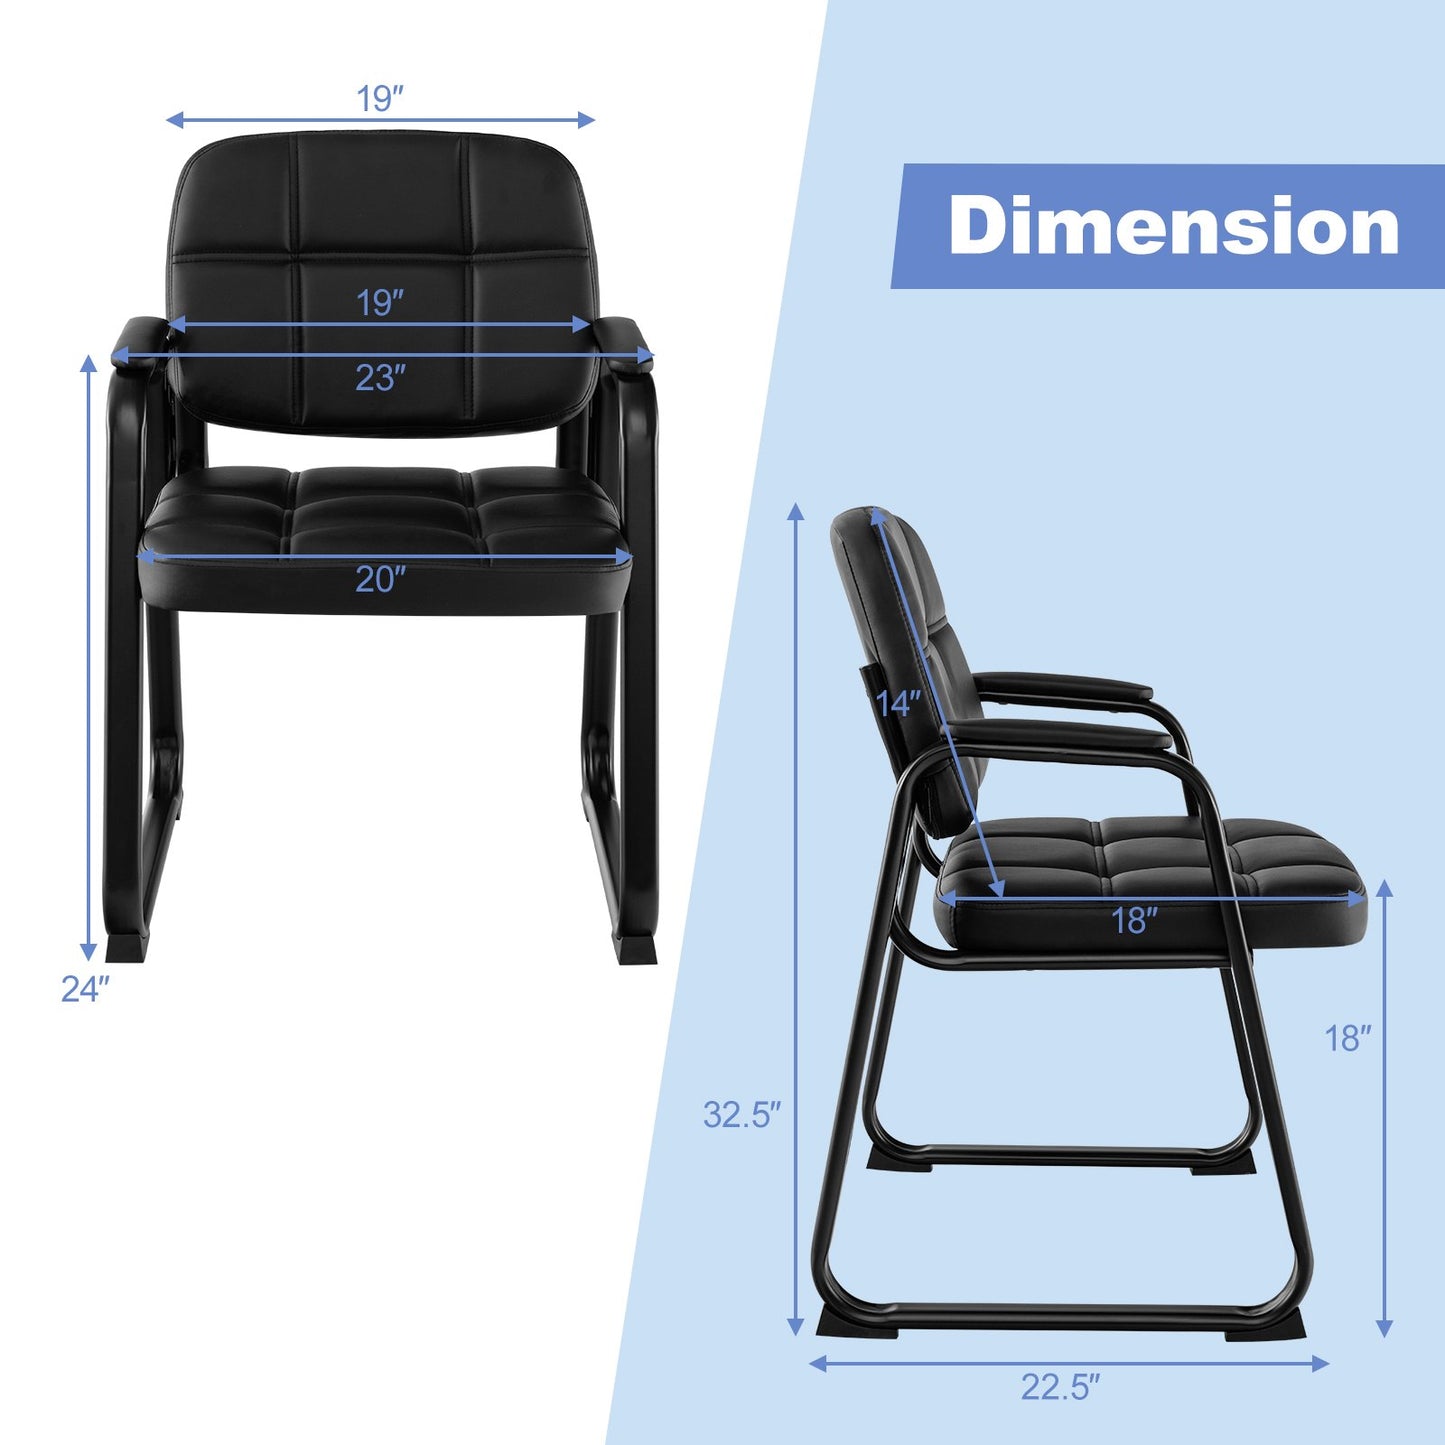 Upholstered Waiting Room Chair with Armrest and Ergonomic Backrest, Black